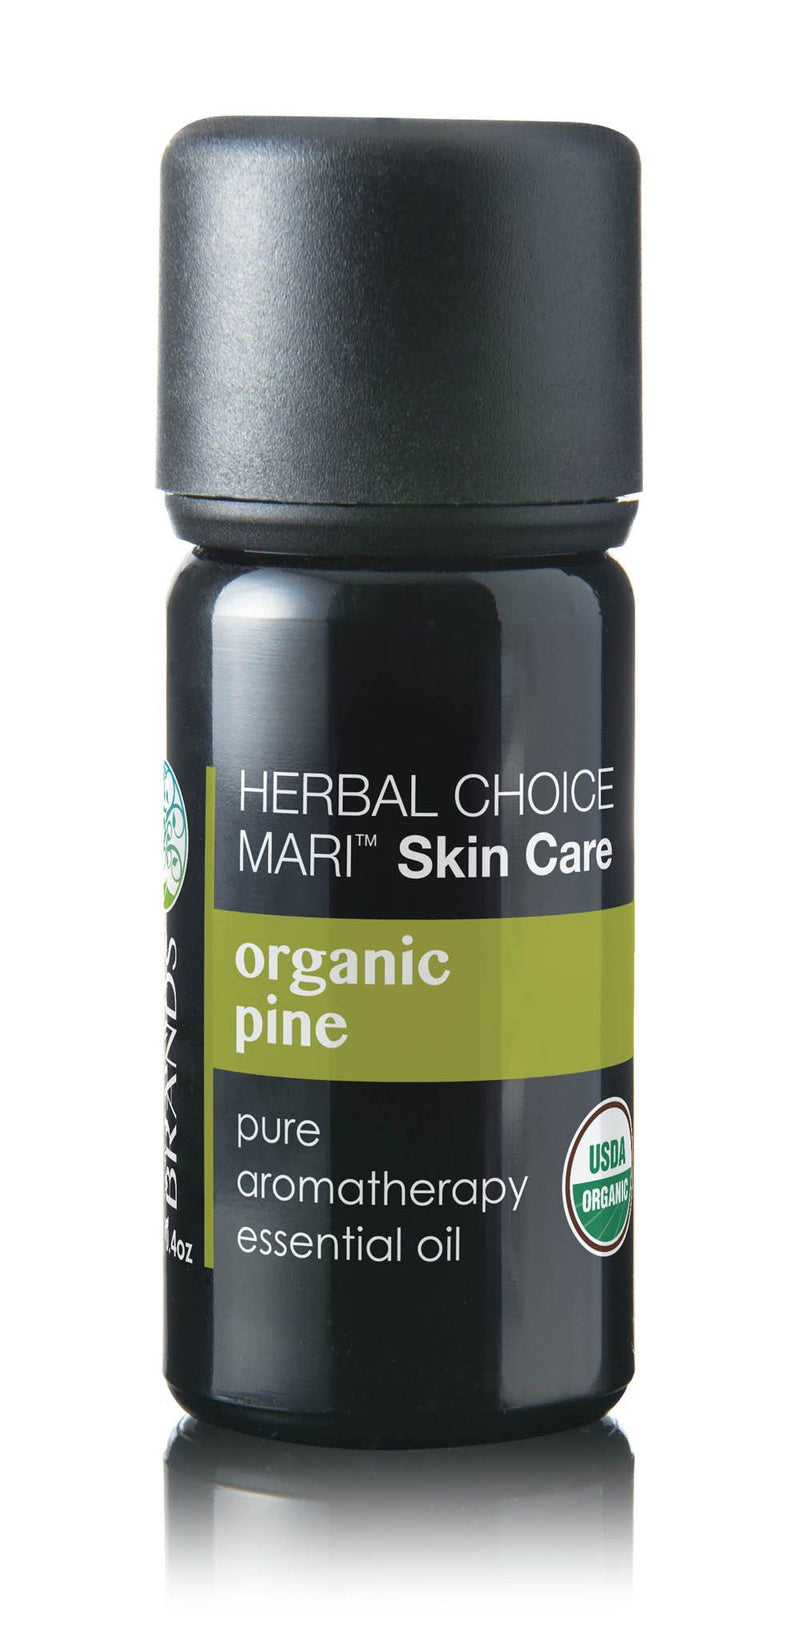 Herbal Choice Mari Organic Pine Essential Oil; 0.3floz Glass - Herbal Choice Mari Organic Pine Essential Oil; 0.3floz Glass - Herbal Choice Mari Organic Pine Essential Oil; 0.3floz Glass